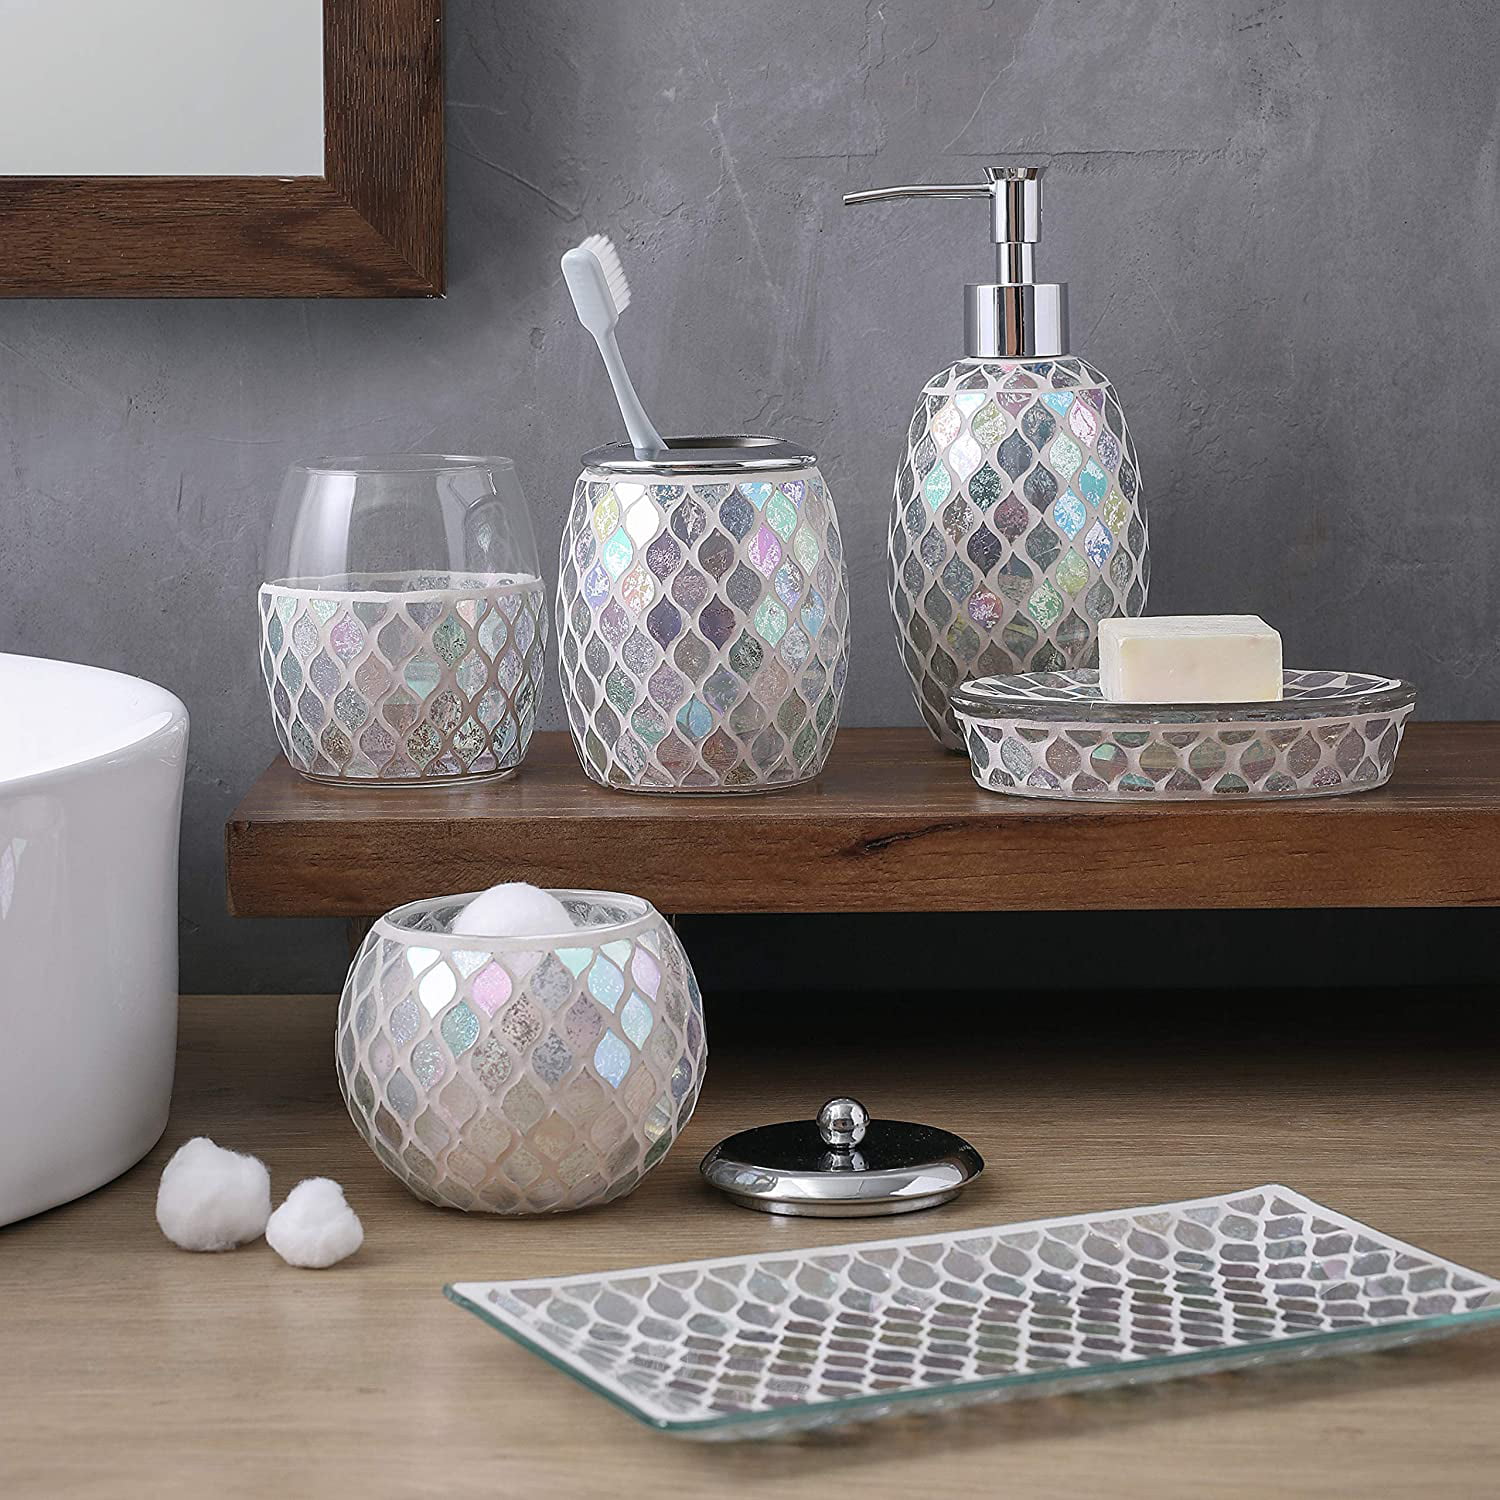 KMWARES Decorative Mosaic Glass Bathroom Accessories Set 5PCs Includes Hande Soap Dispenser /& Cotton Jar /& Tumbler /& Vanity Tray /& Toothbrush Holder Multi Blue Green